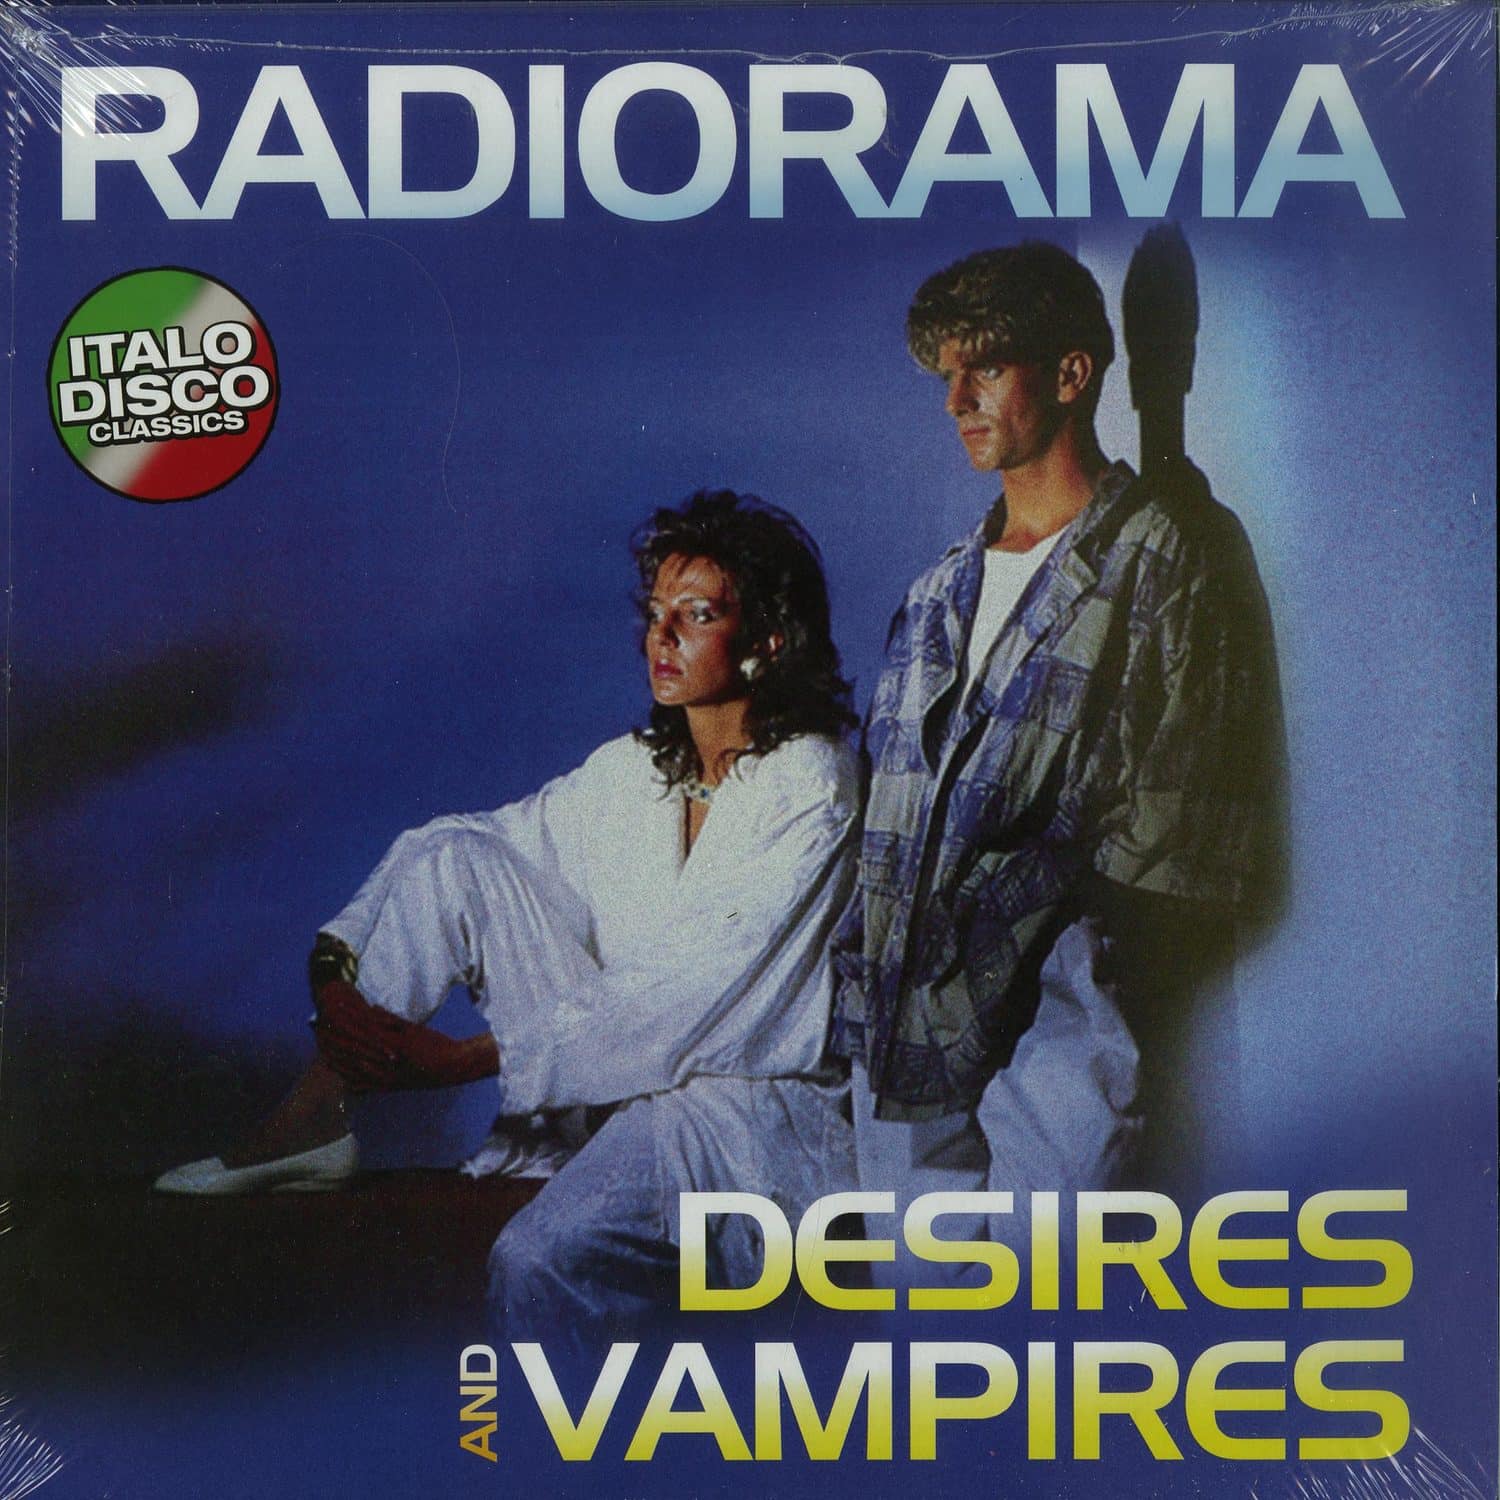 Radiorama - DESIRES AND VAMPIRES 